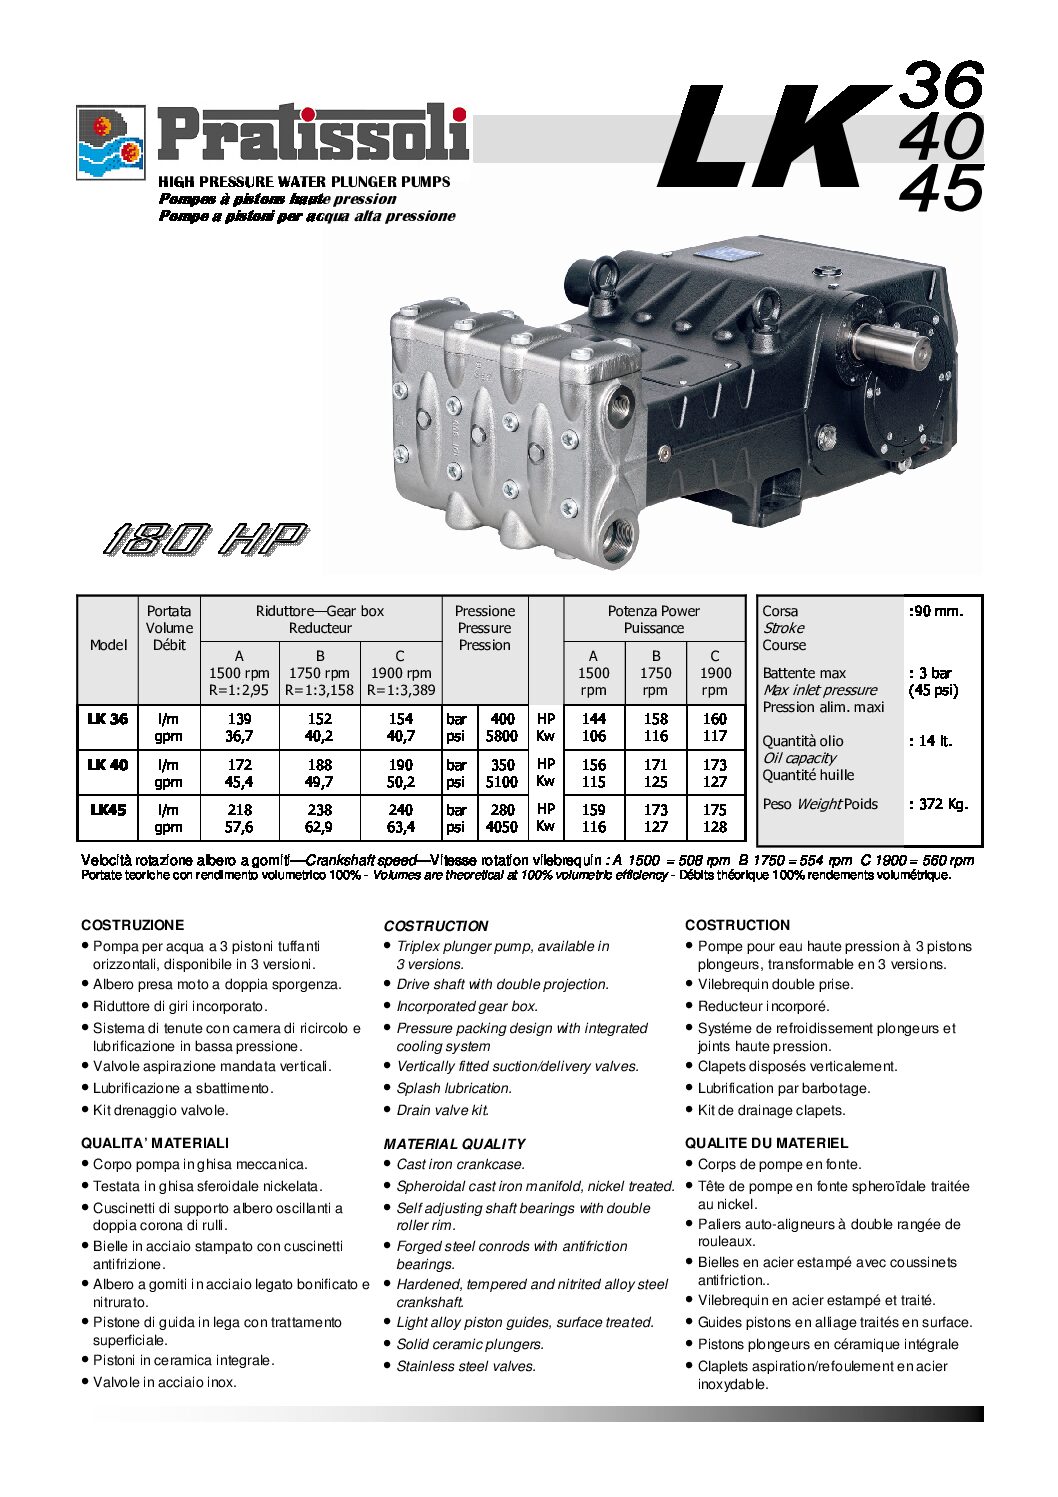 Pratissoli LK Series 36/40/45 Pump Data Sheet